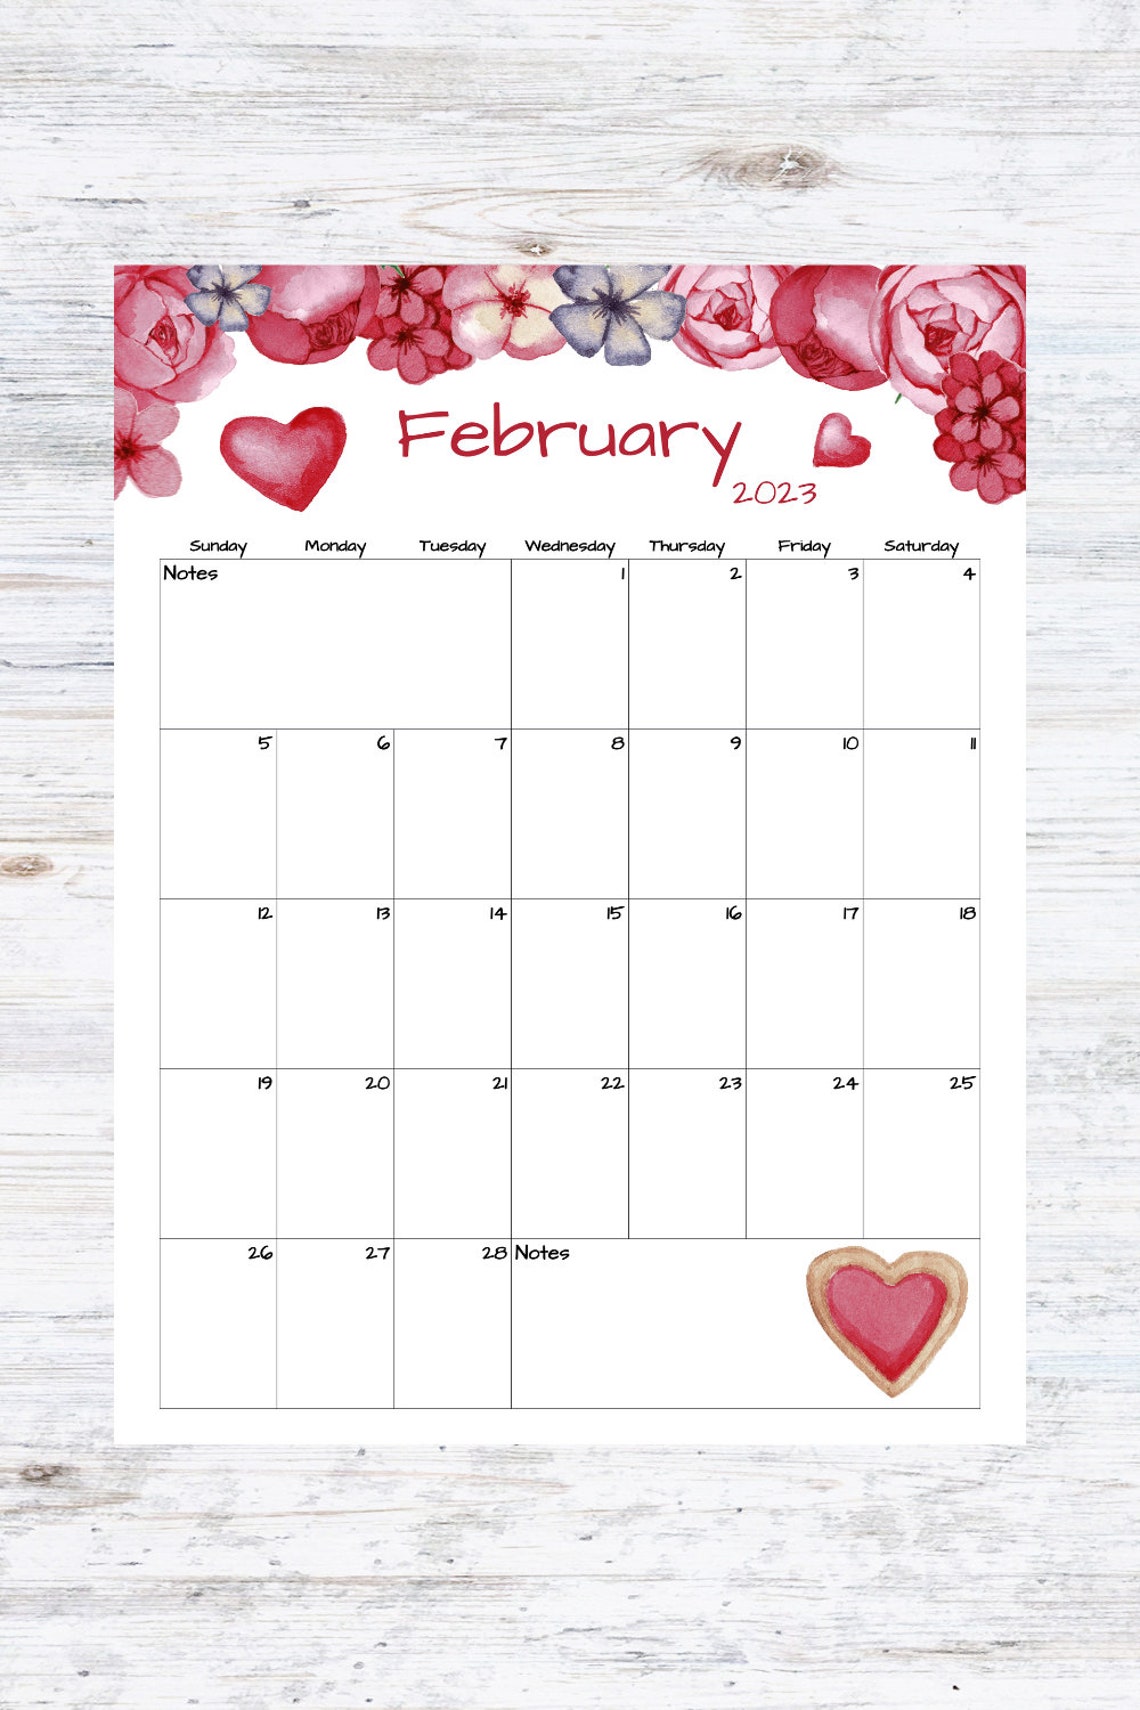 Fillable/editable February Calendar February 2023 Calendar - Etsy